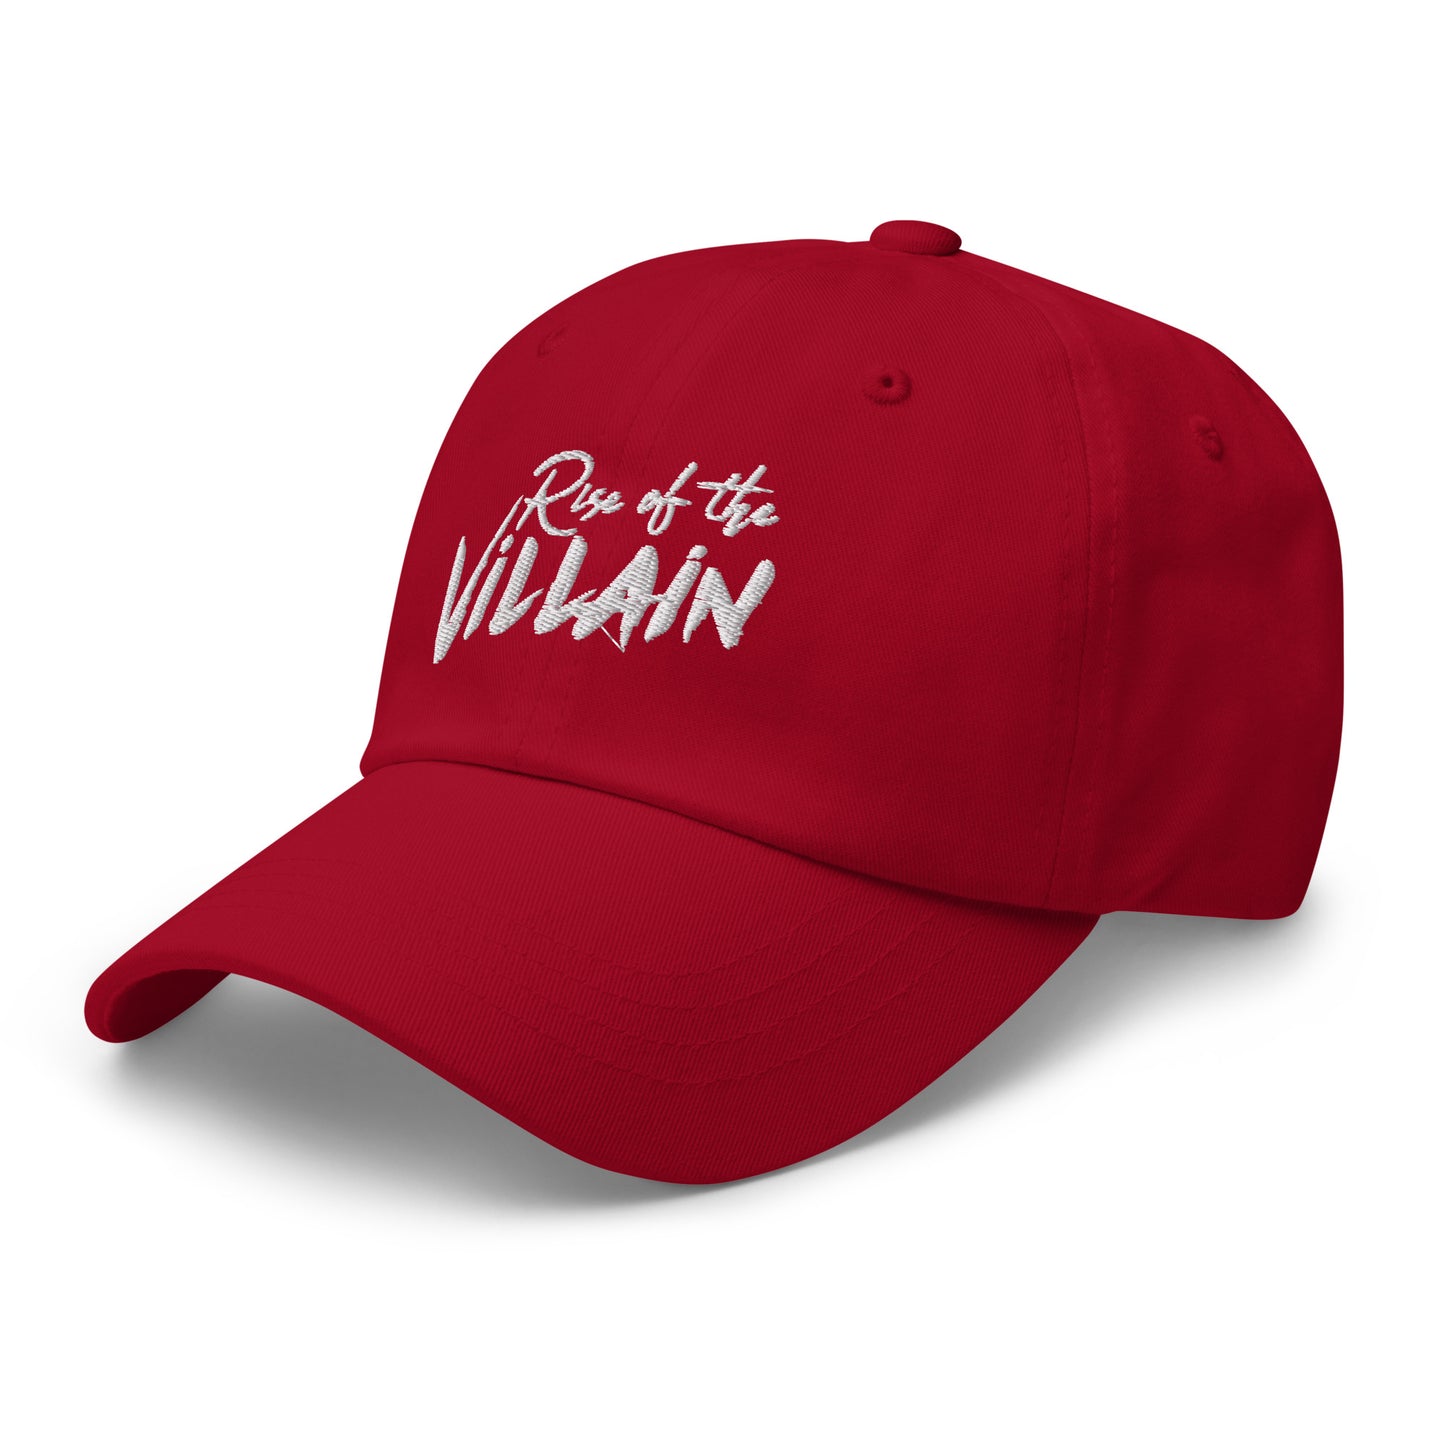 Rise of the Villain hat